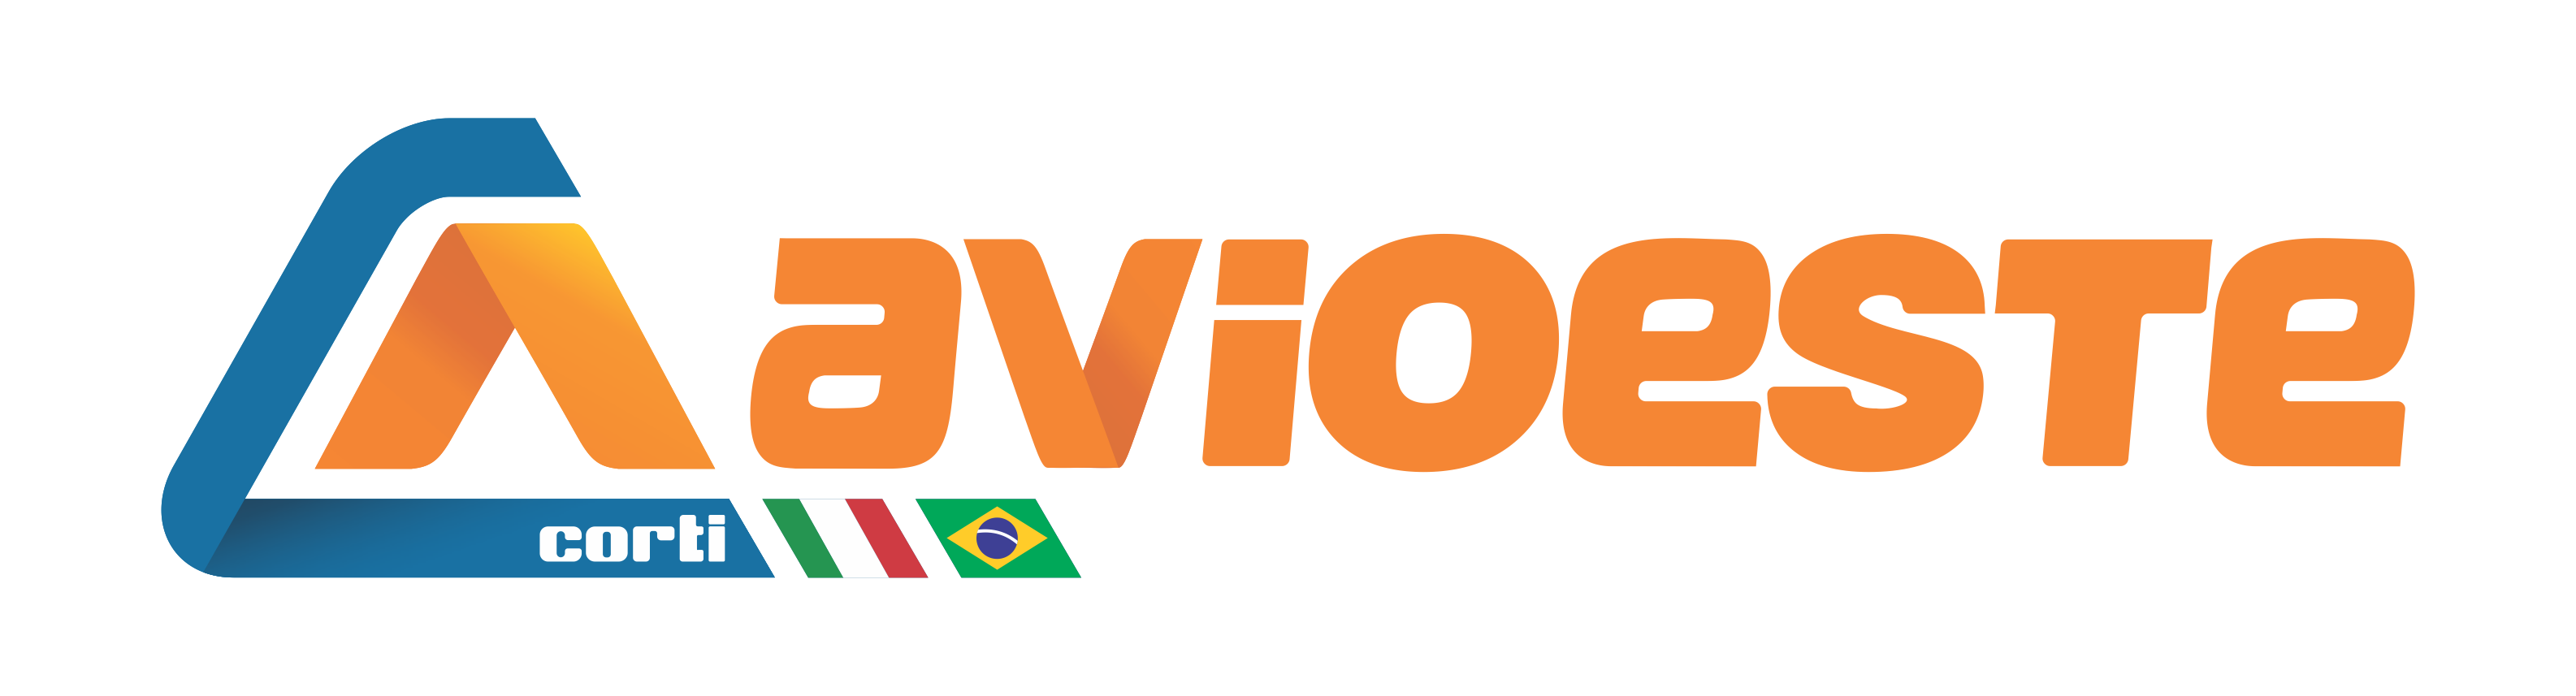 Logo: Corti Avioeste